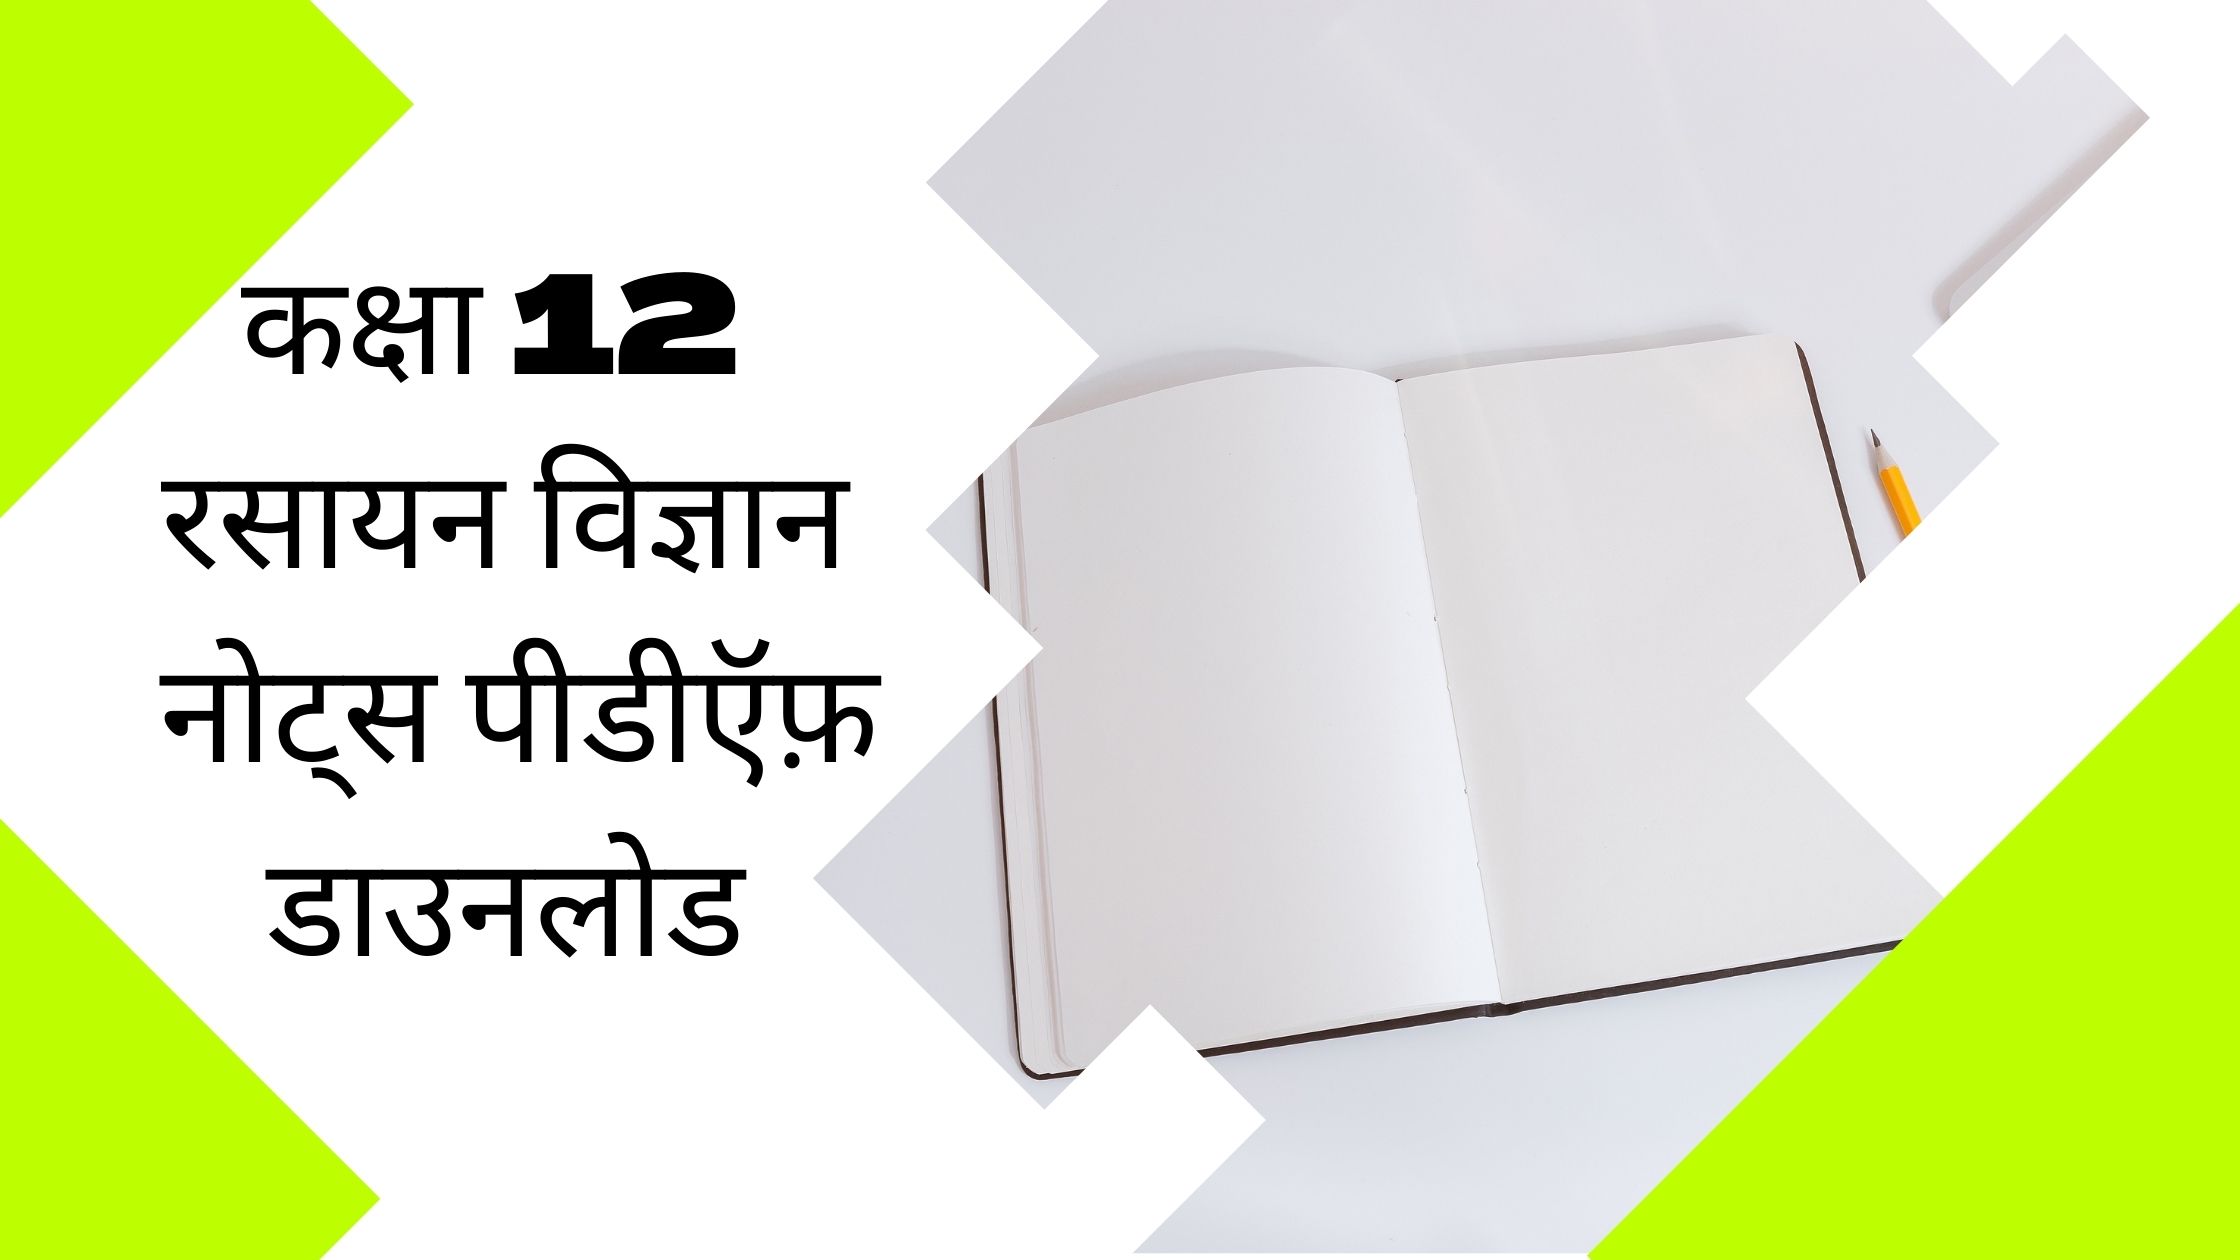 Class 12 Chemistry Notes in Hindi | handwritten notes for class 12 chemistry pdf in hindi